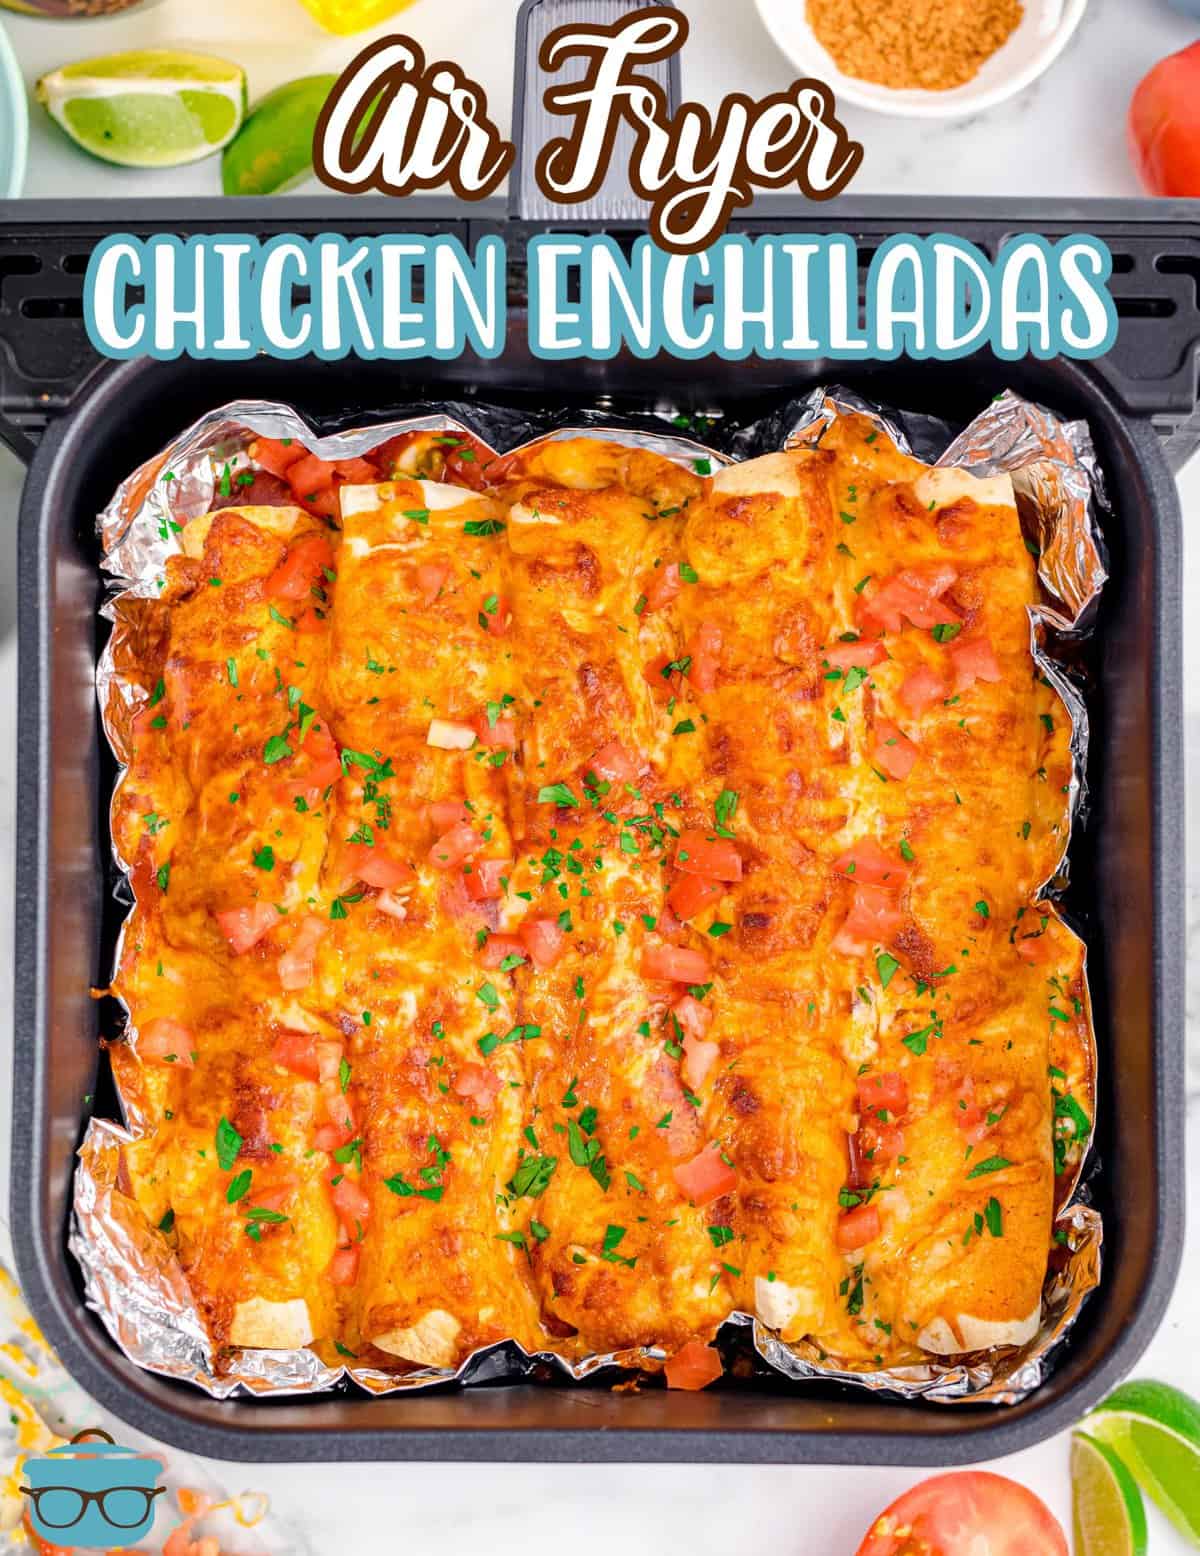 fully cooked chicken enchiladas shown in an air fryer basket.